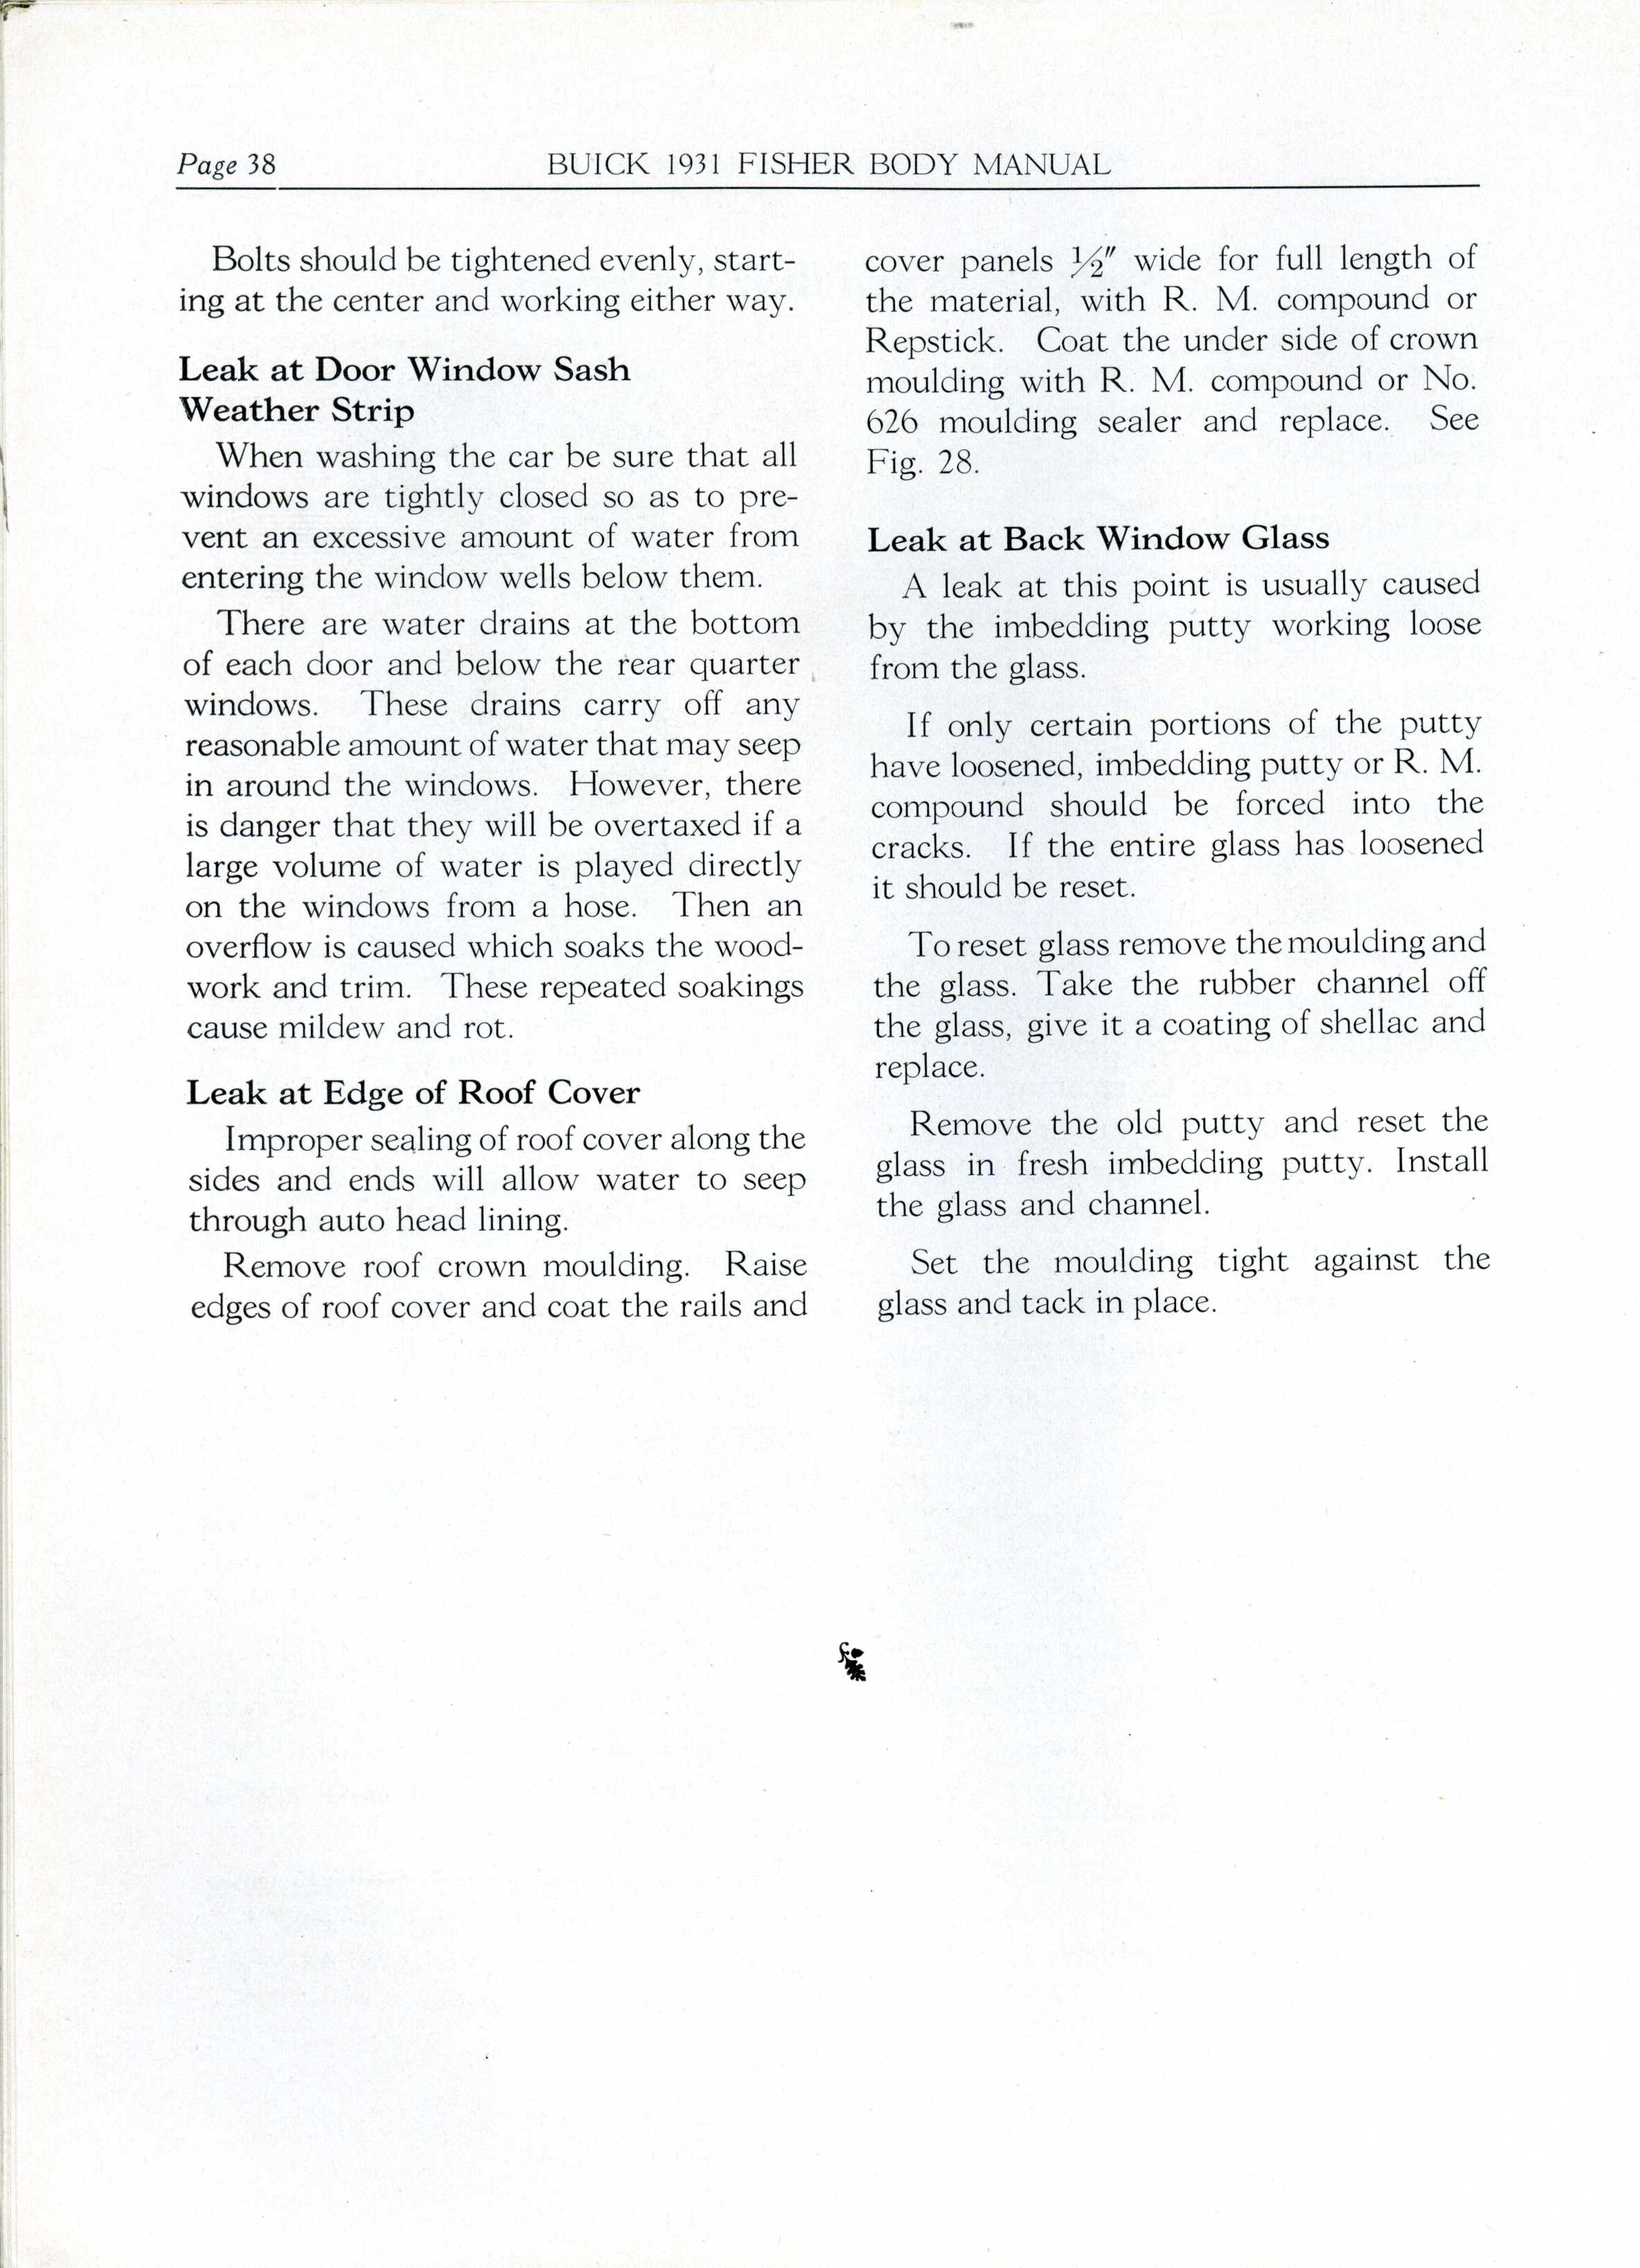 1931 Buick Fisher Body Manual-38